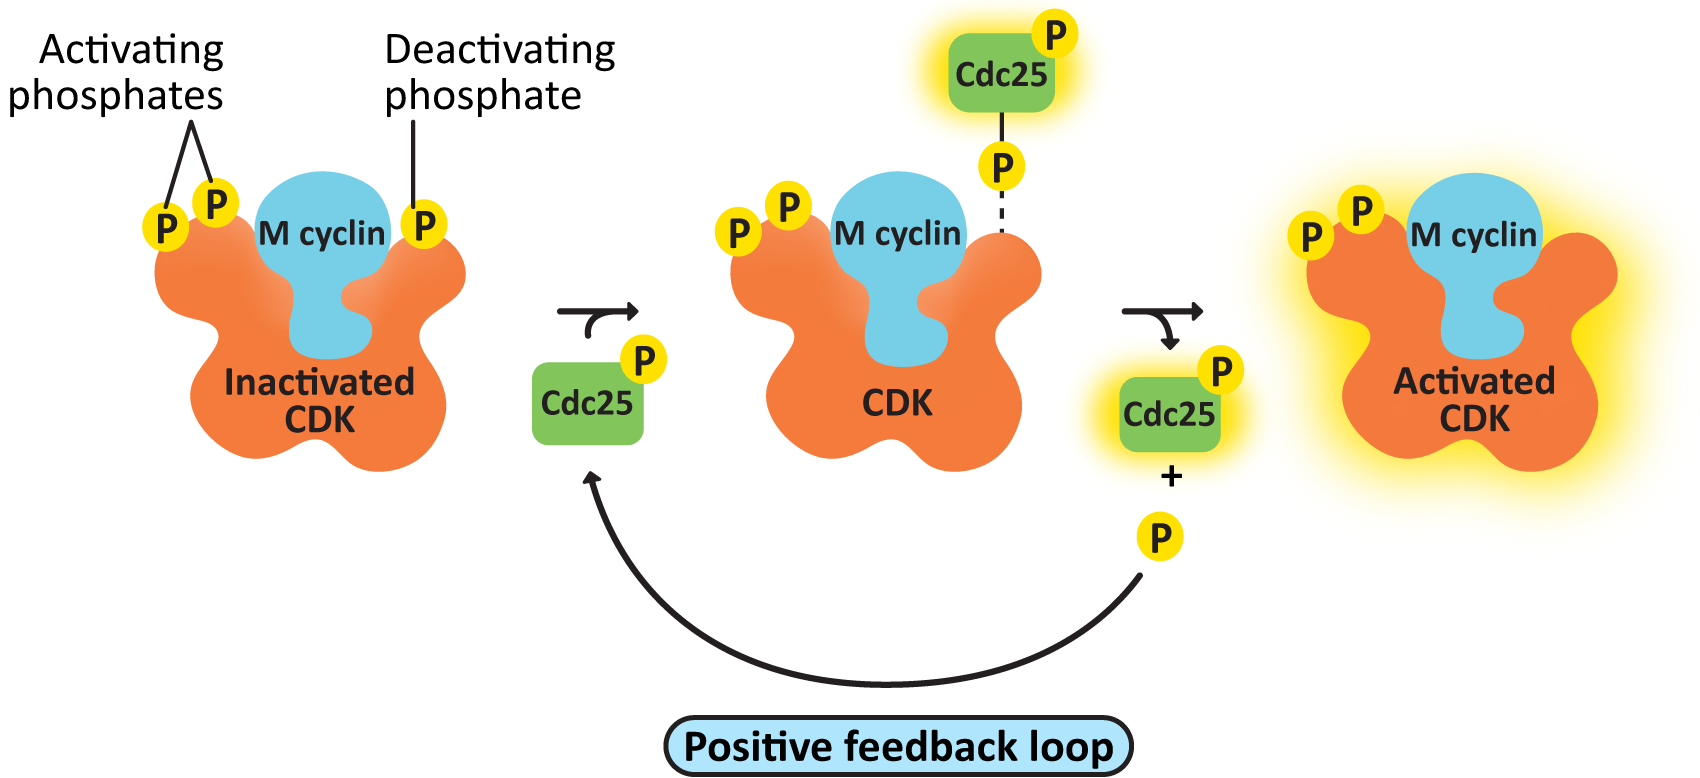 The positive feedback loop of Cdc25